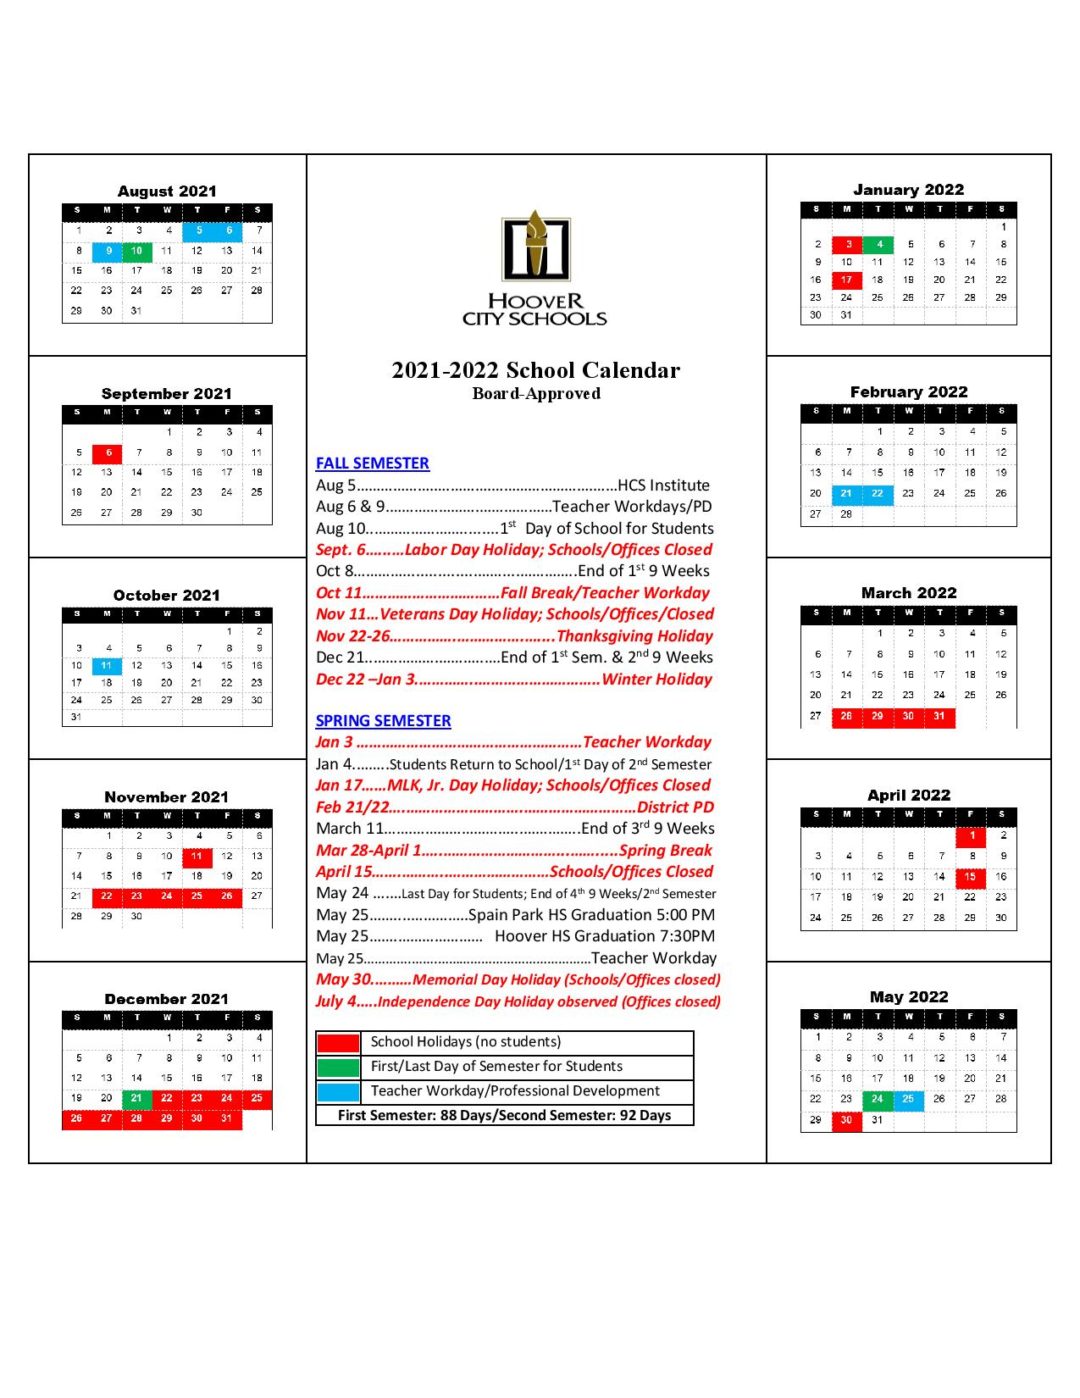 Hoover City Schools Calendar Holidays 2021-2022